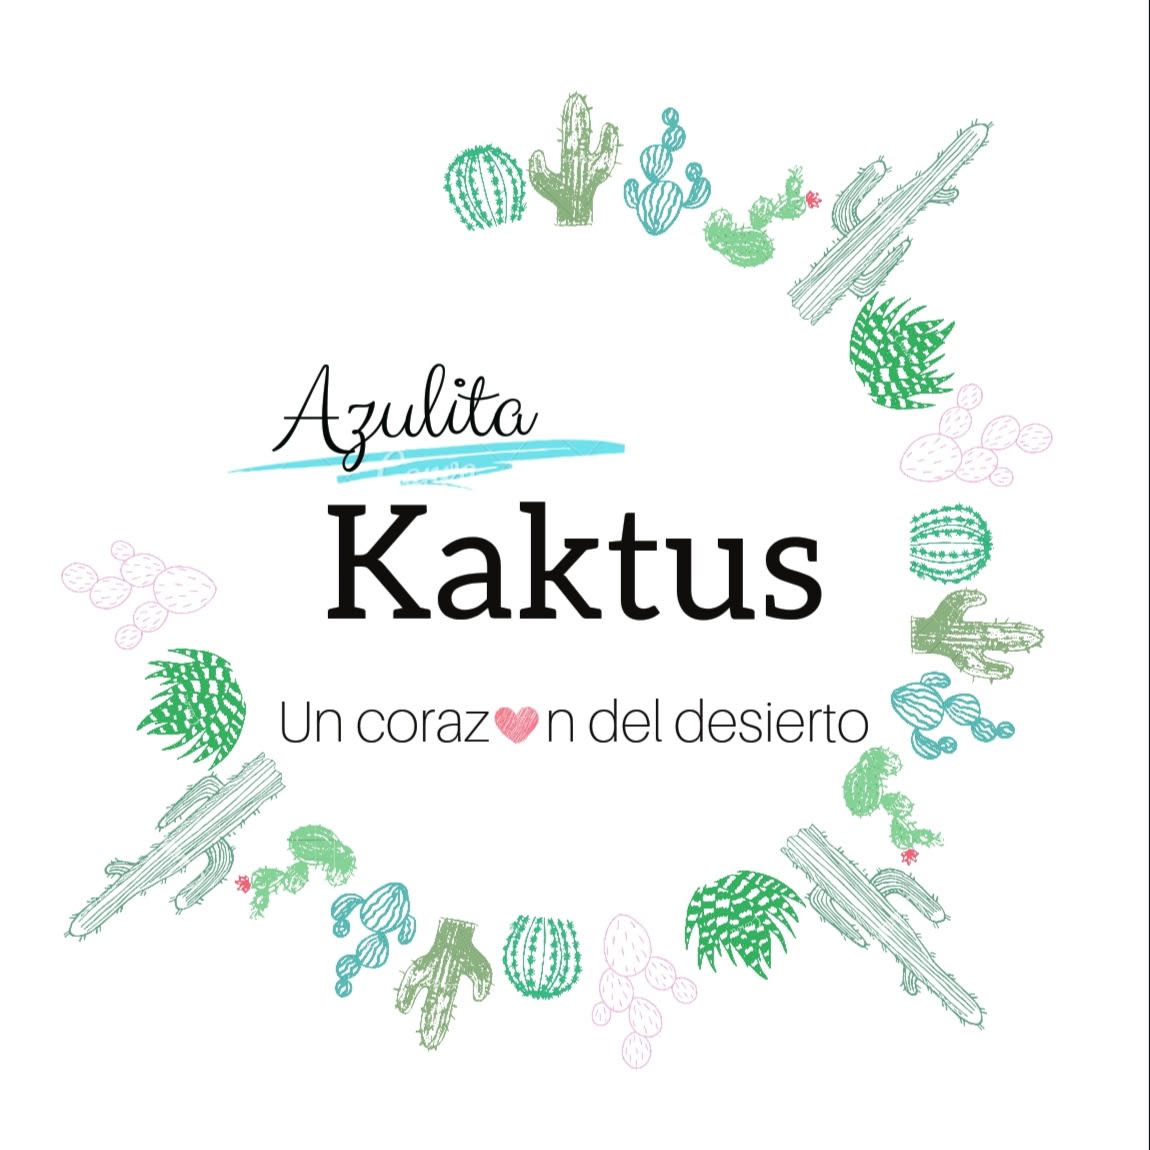 Azulita Kaktus